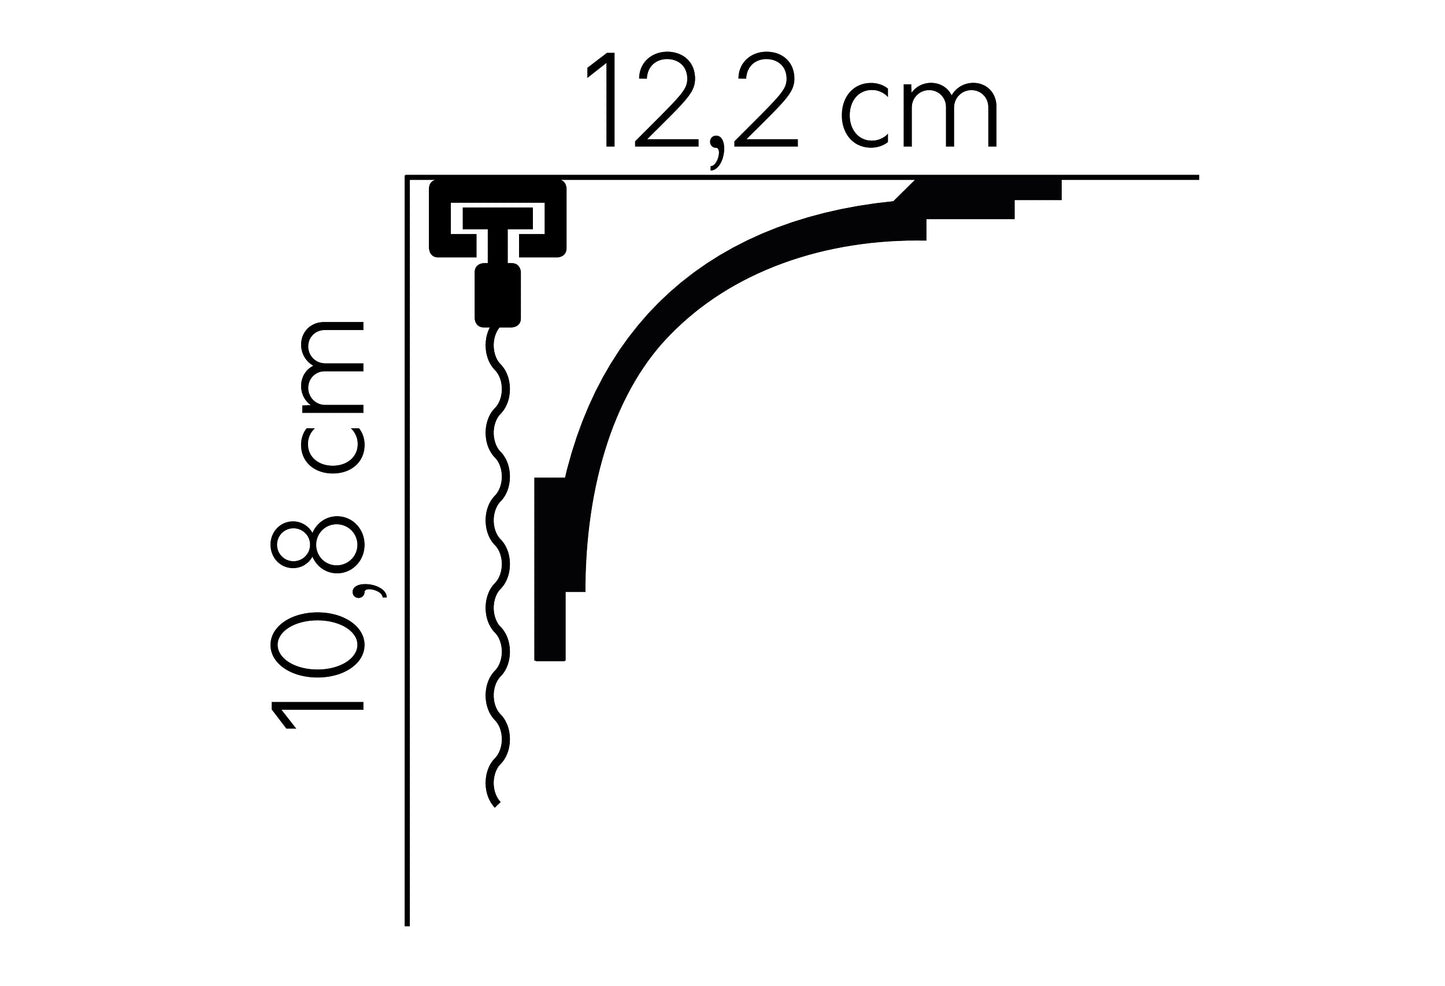 MD105 - Curtain Profile measurements